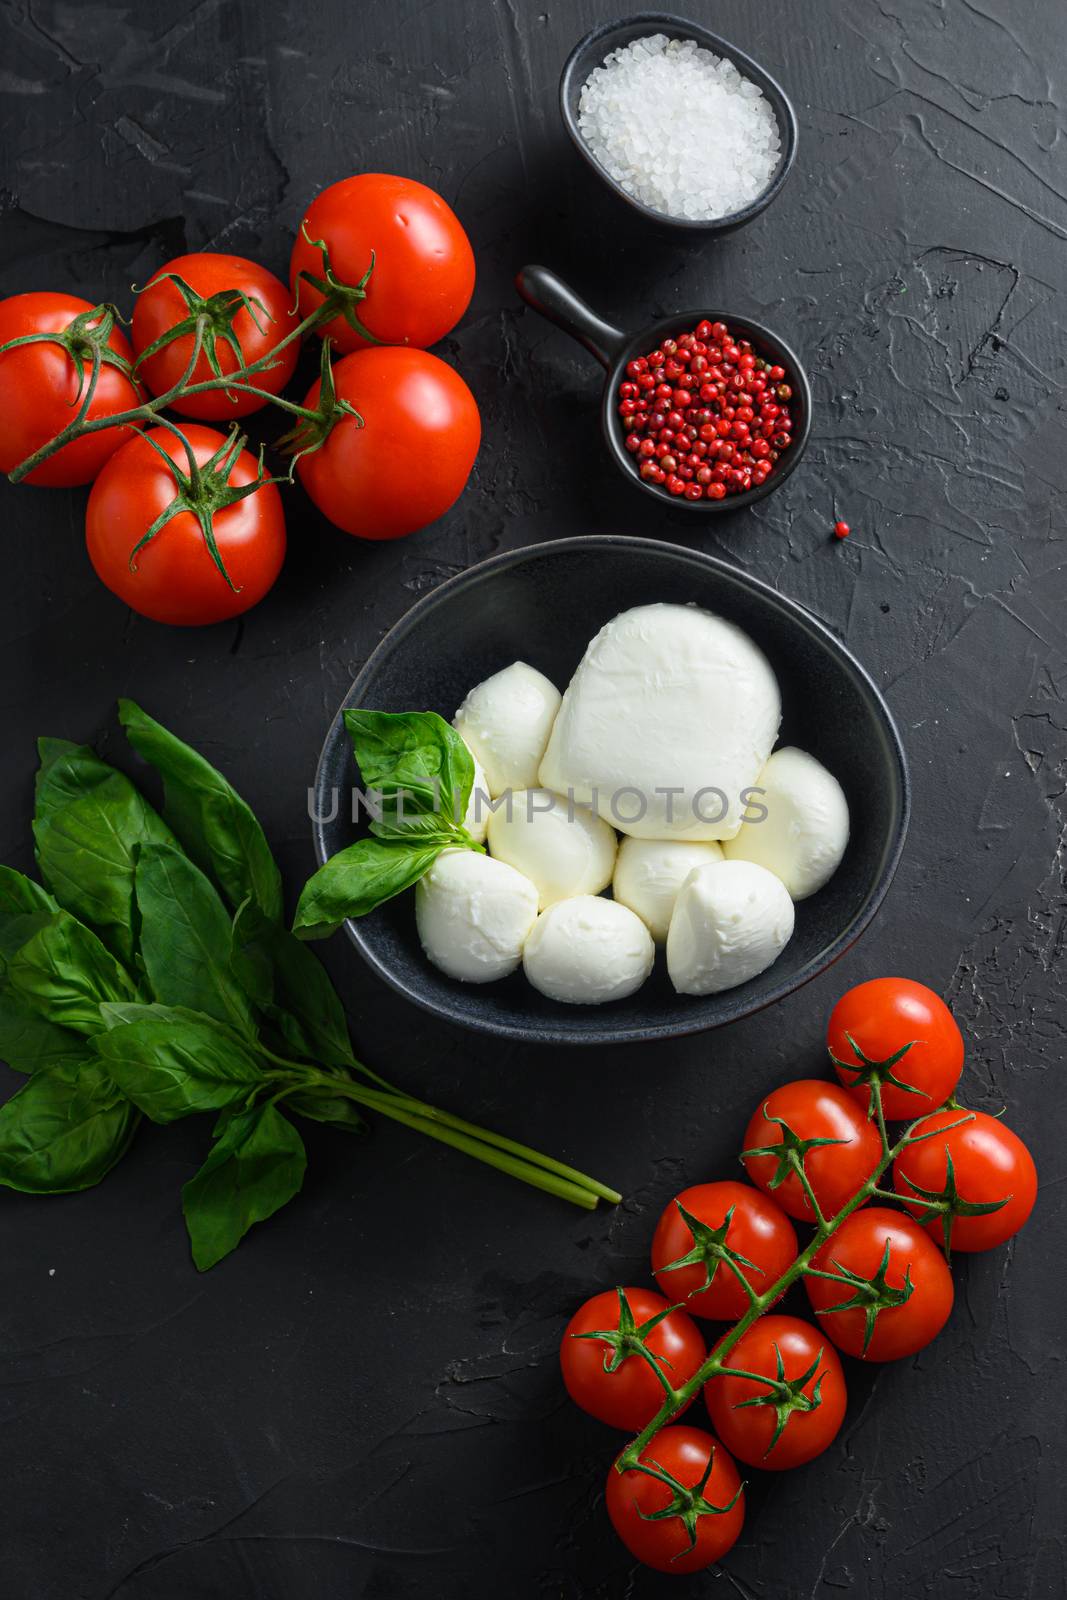 caprese salad ingredients Mozzarella balls, buffalo , tomatoes, basil leaves, olive oil with vinegar pepper salt Italian recipe black stone background. selective focus, copy space. Top view